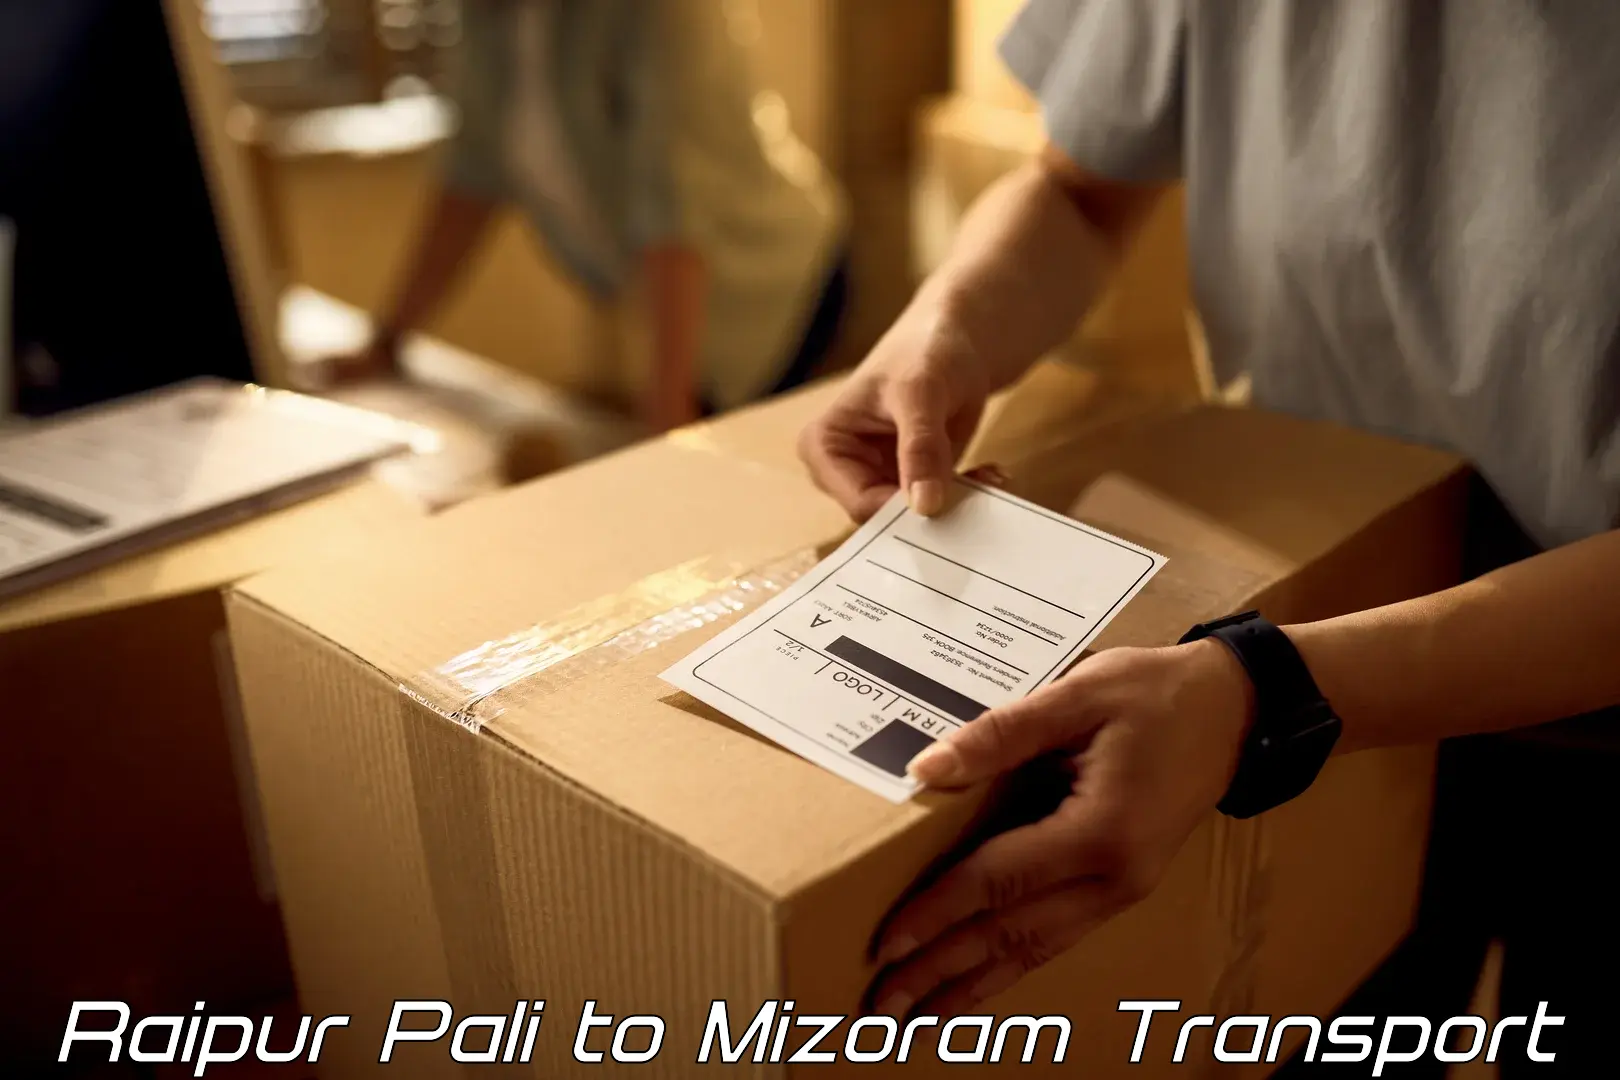 Container transport service Raipur Pali to Mizoram